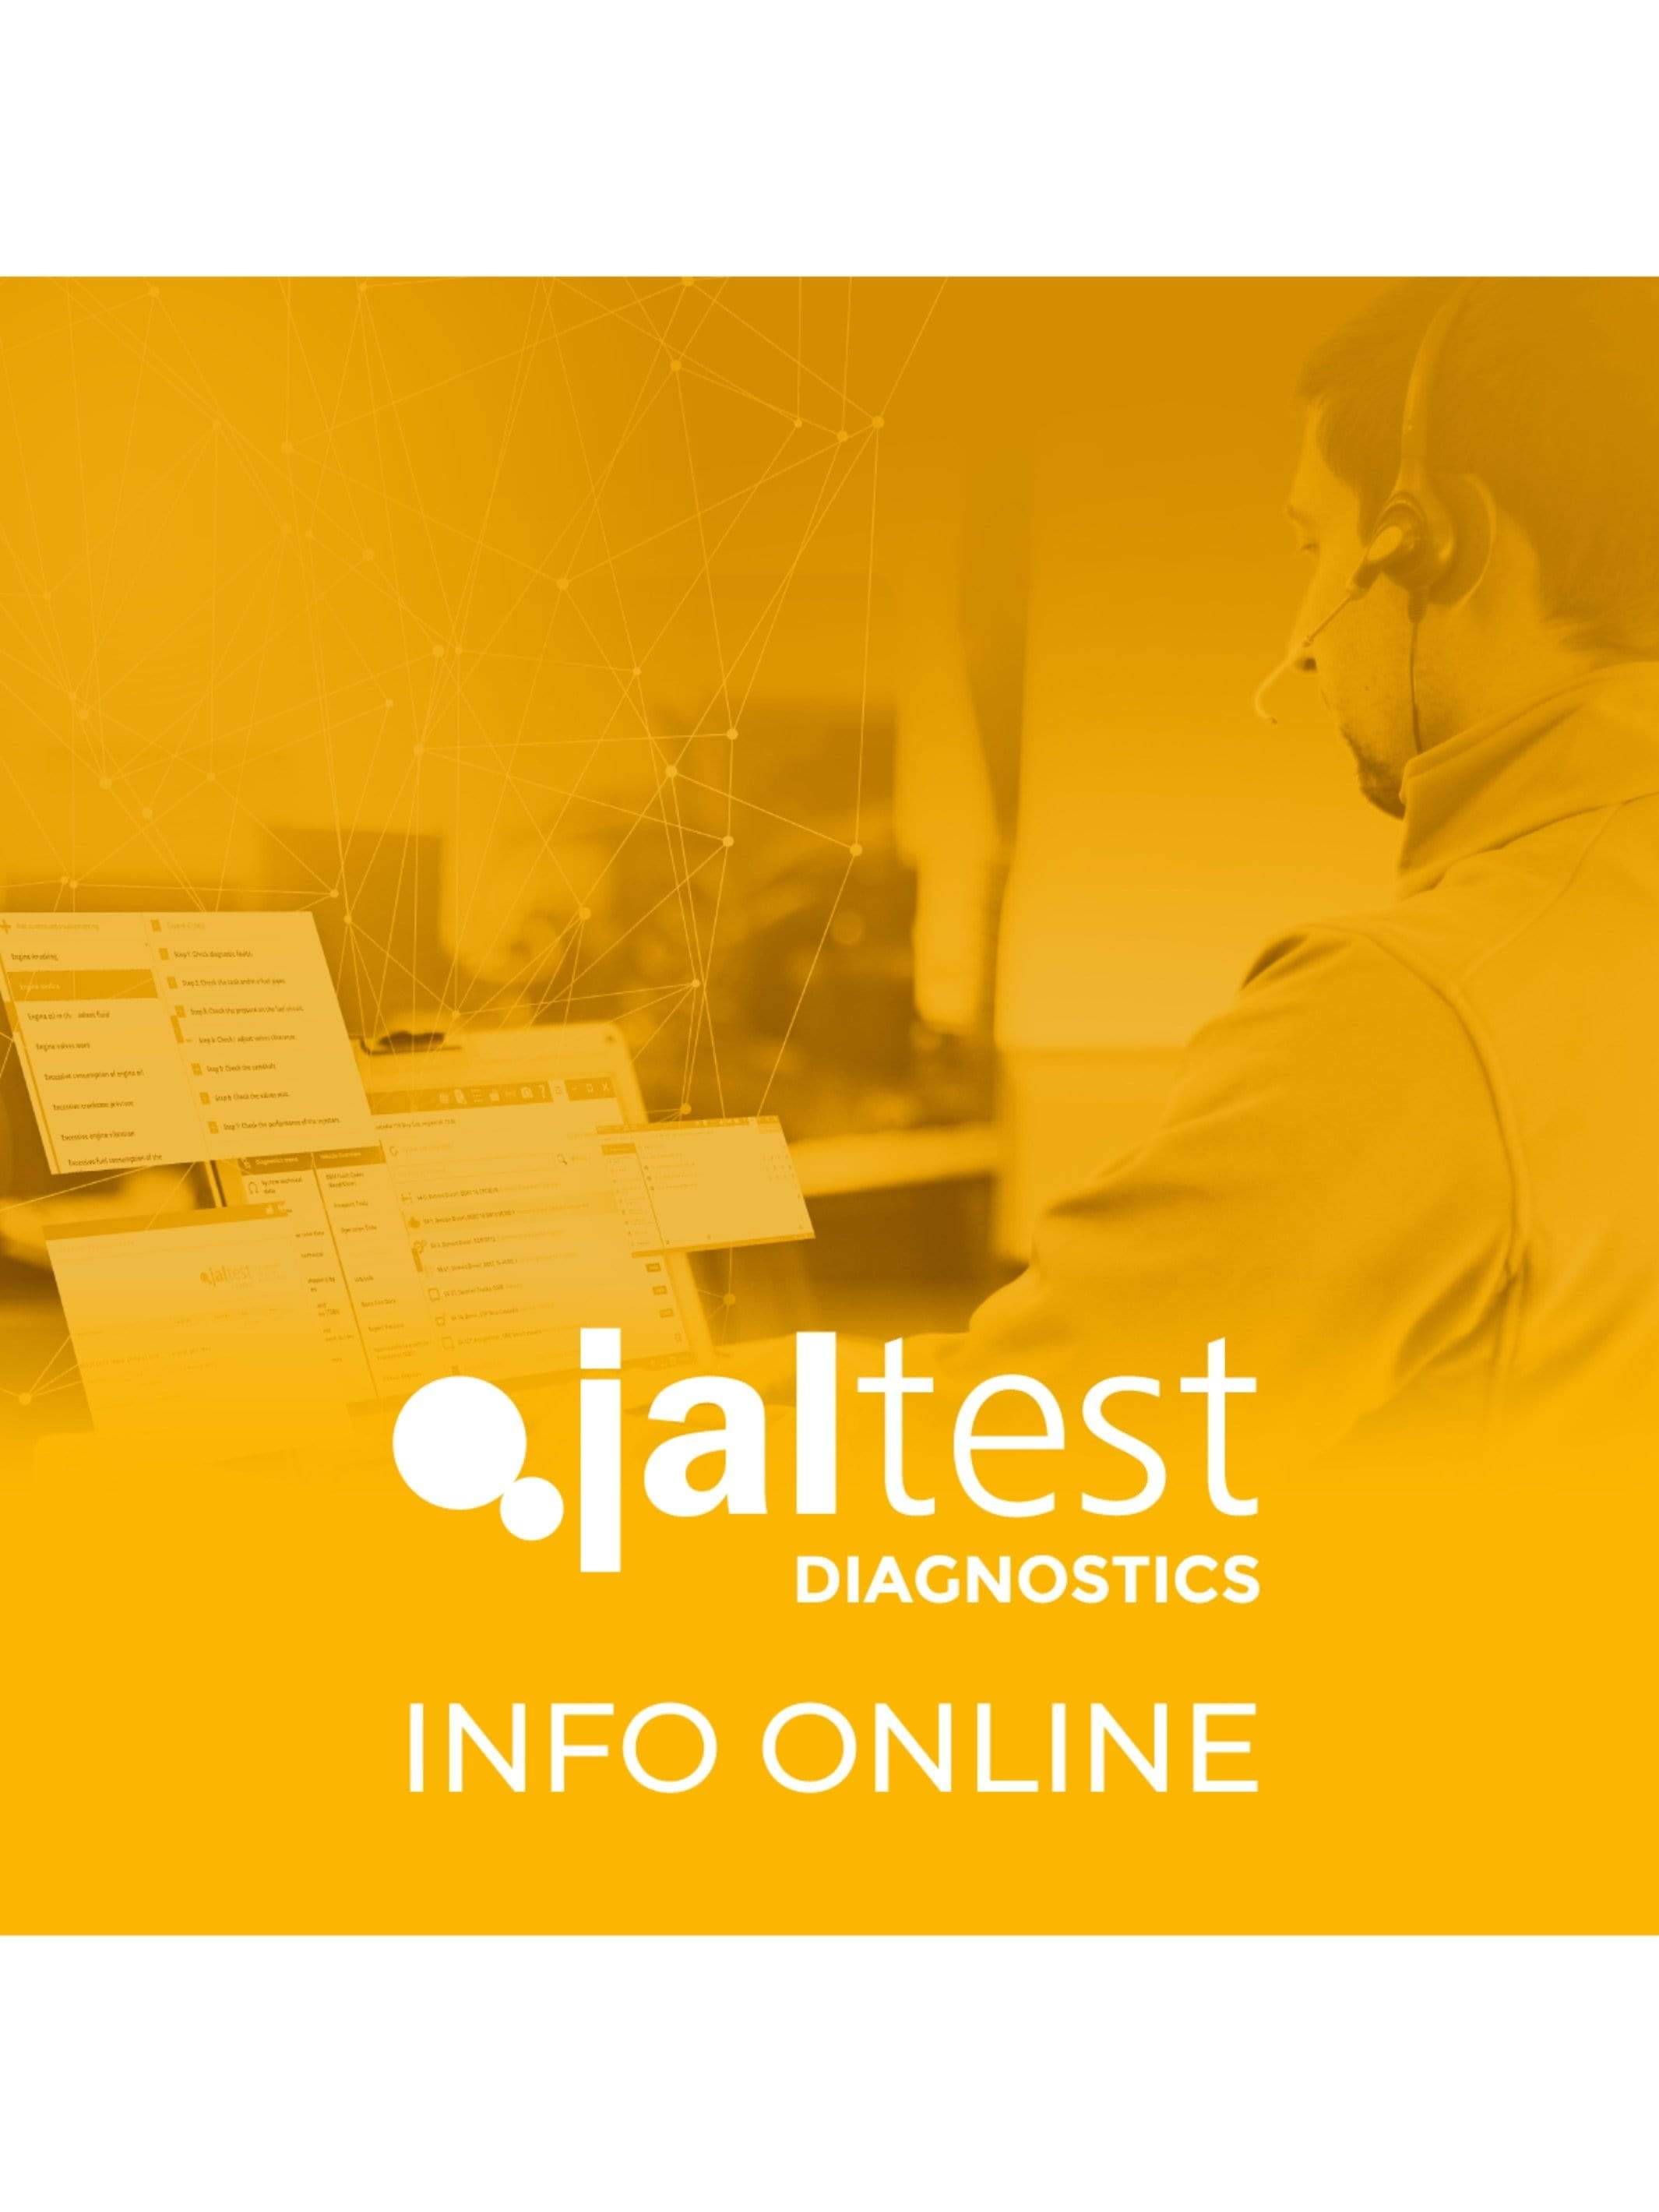 Jaltest OHW Diagnostics Info - Jaltest Deluxe Diagnostic Computer Kit for Commercial Vehicle, Construction & Agriculture Equipment